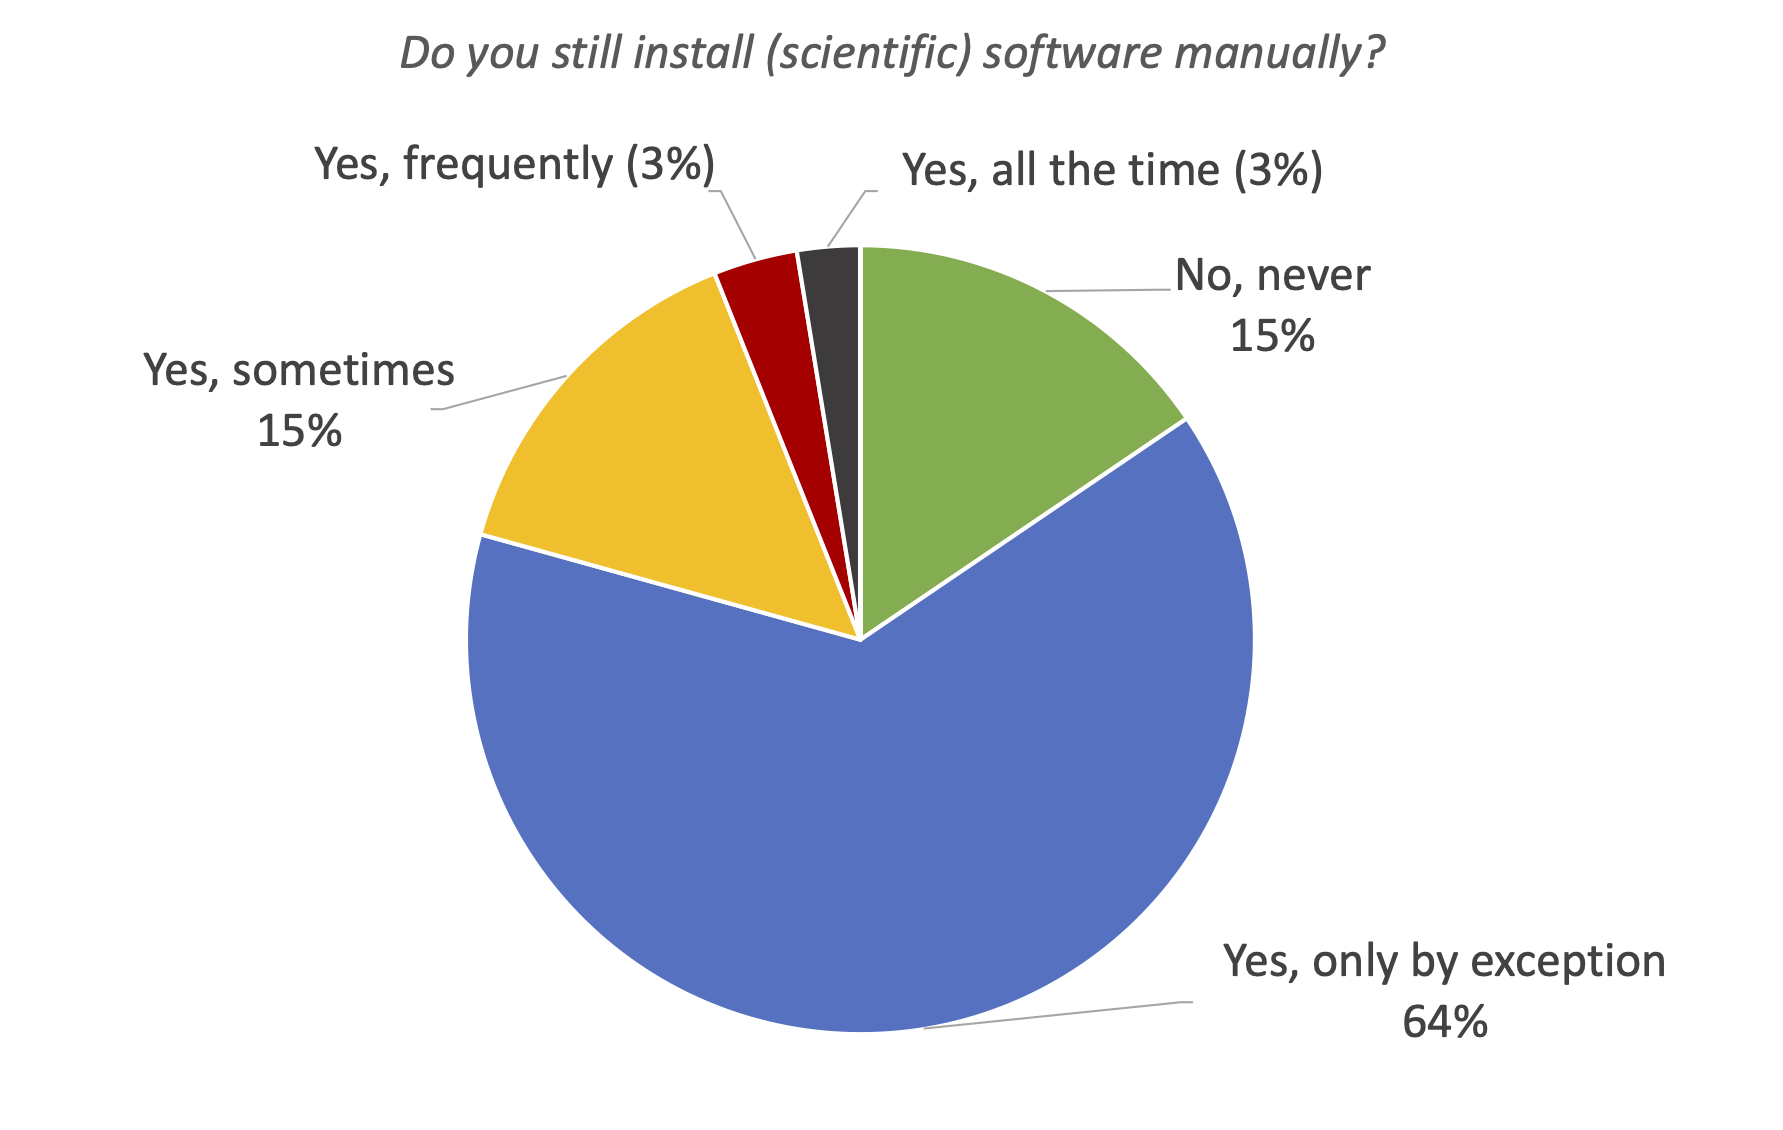 25. Do you still install (scientific) software manually?